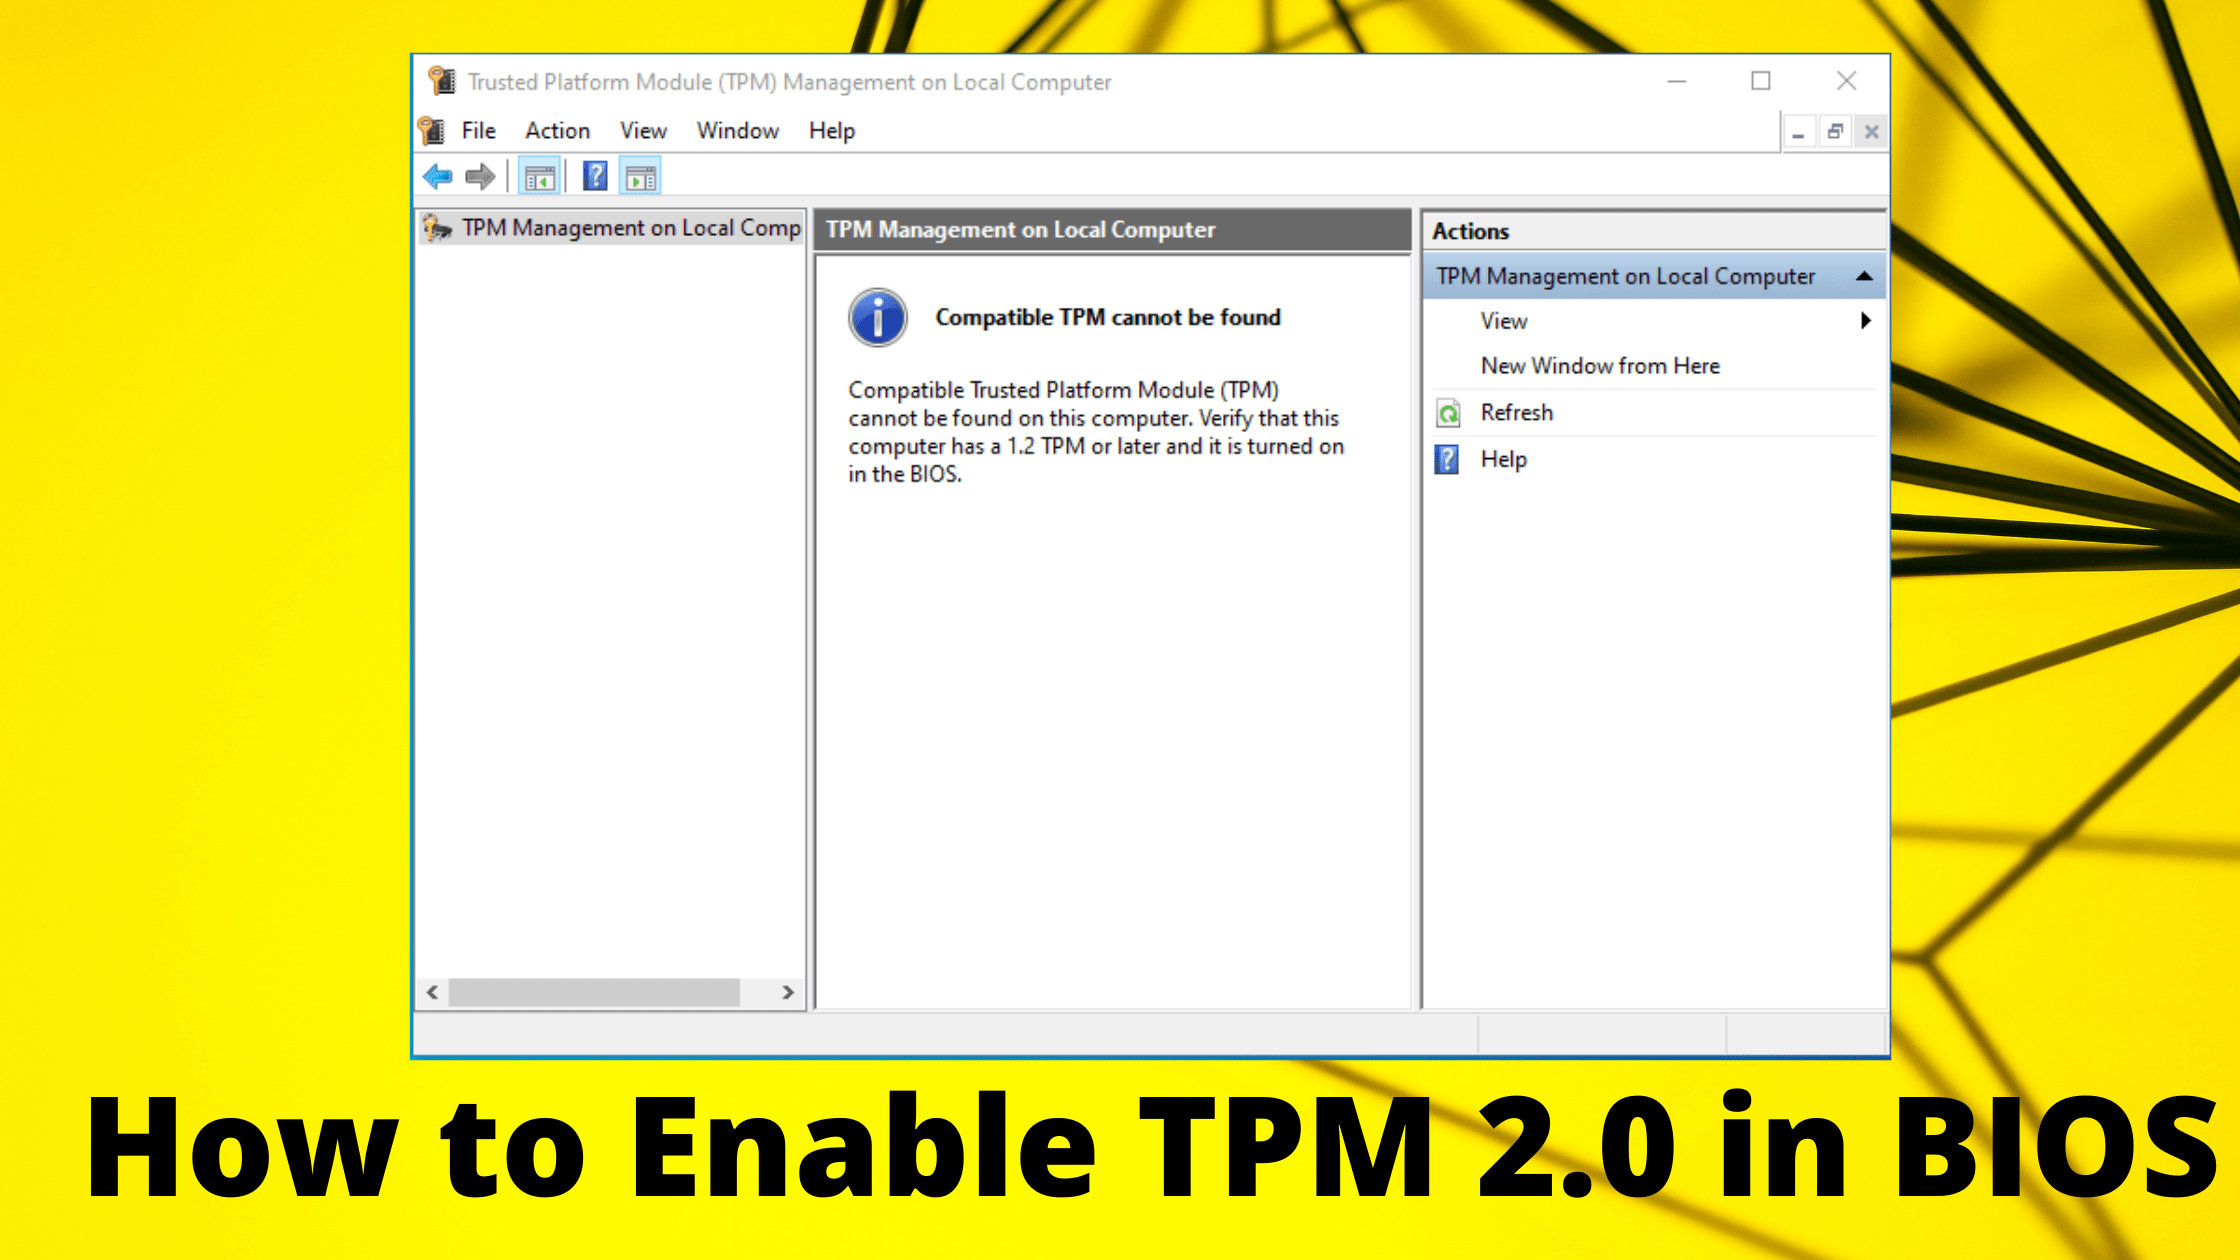 Enable TPM 2.0